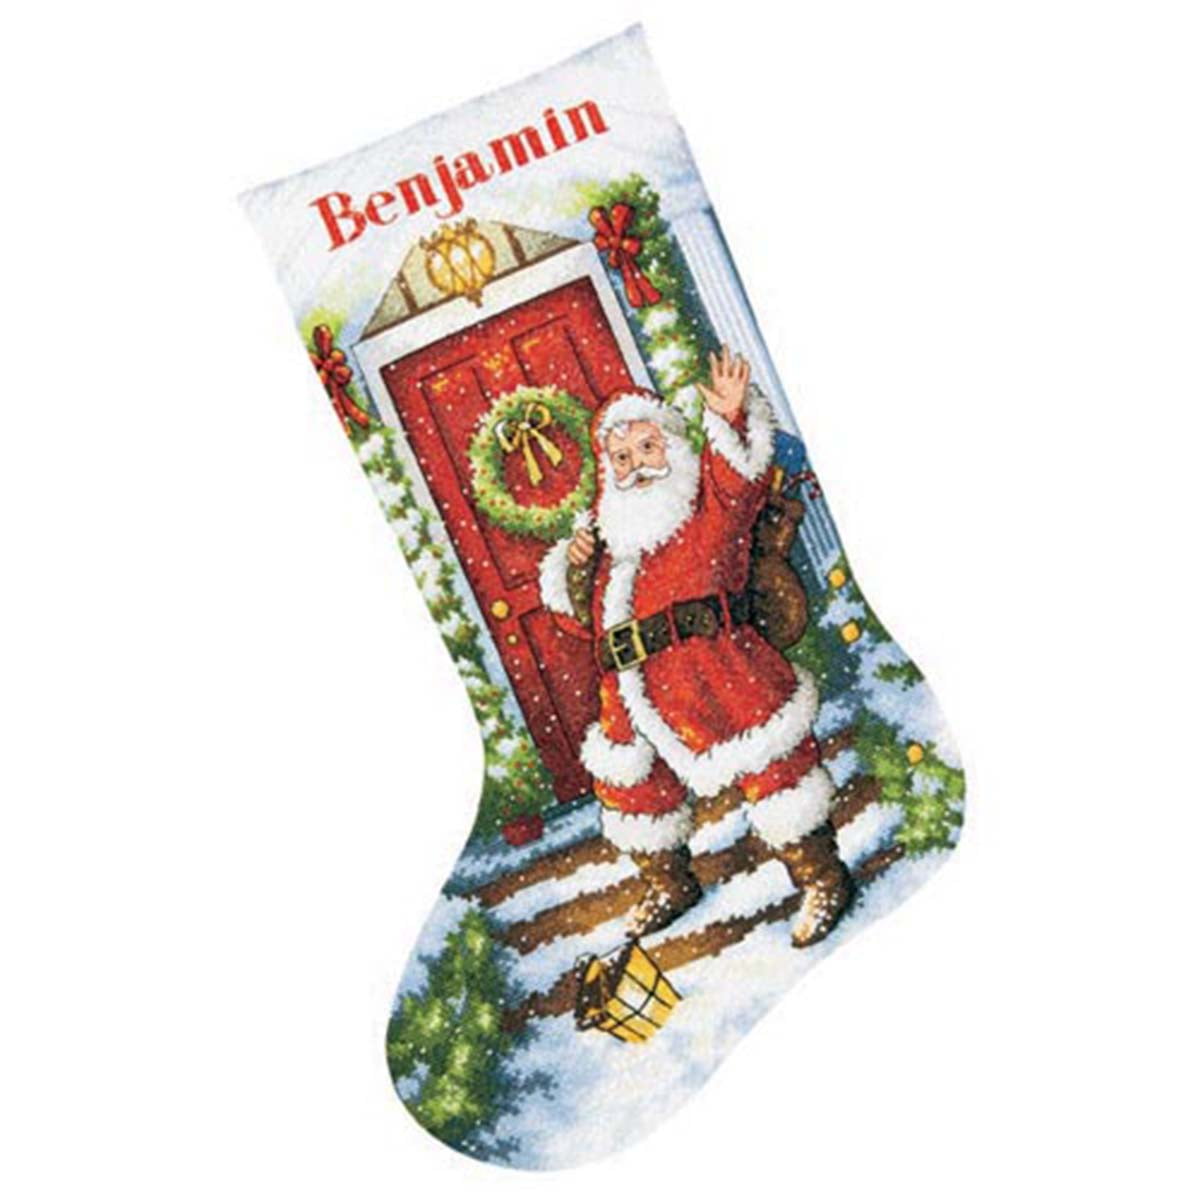 DECORATING THE CLAUS' Christmas Stocking Kit, Janlynn 2004